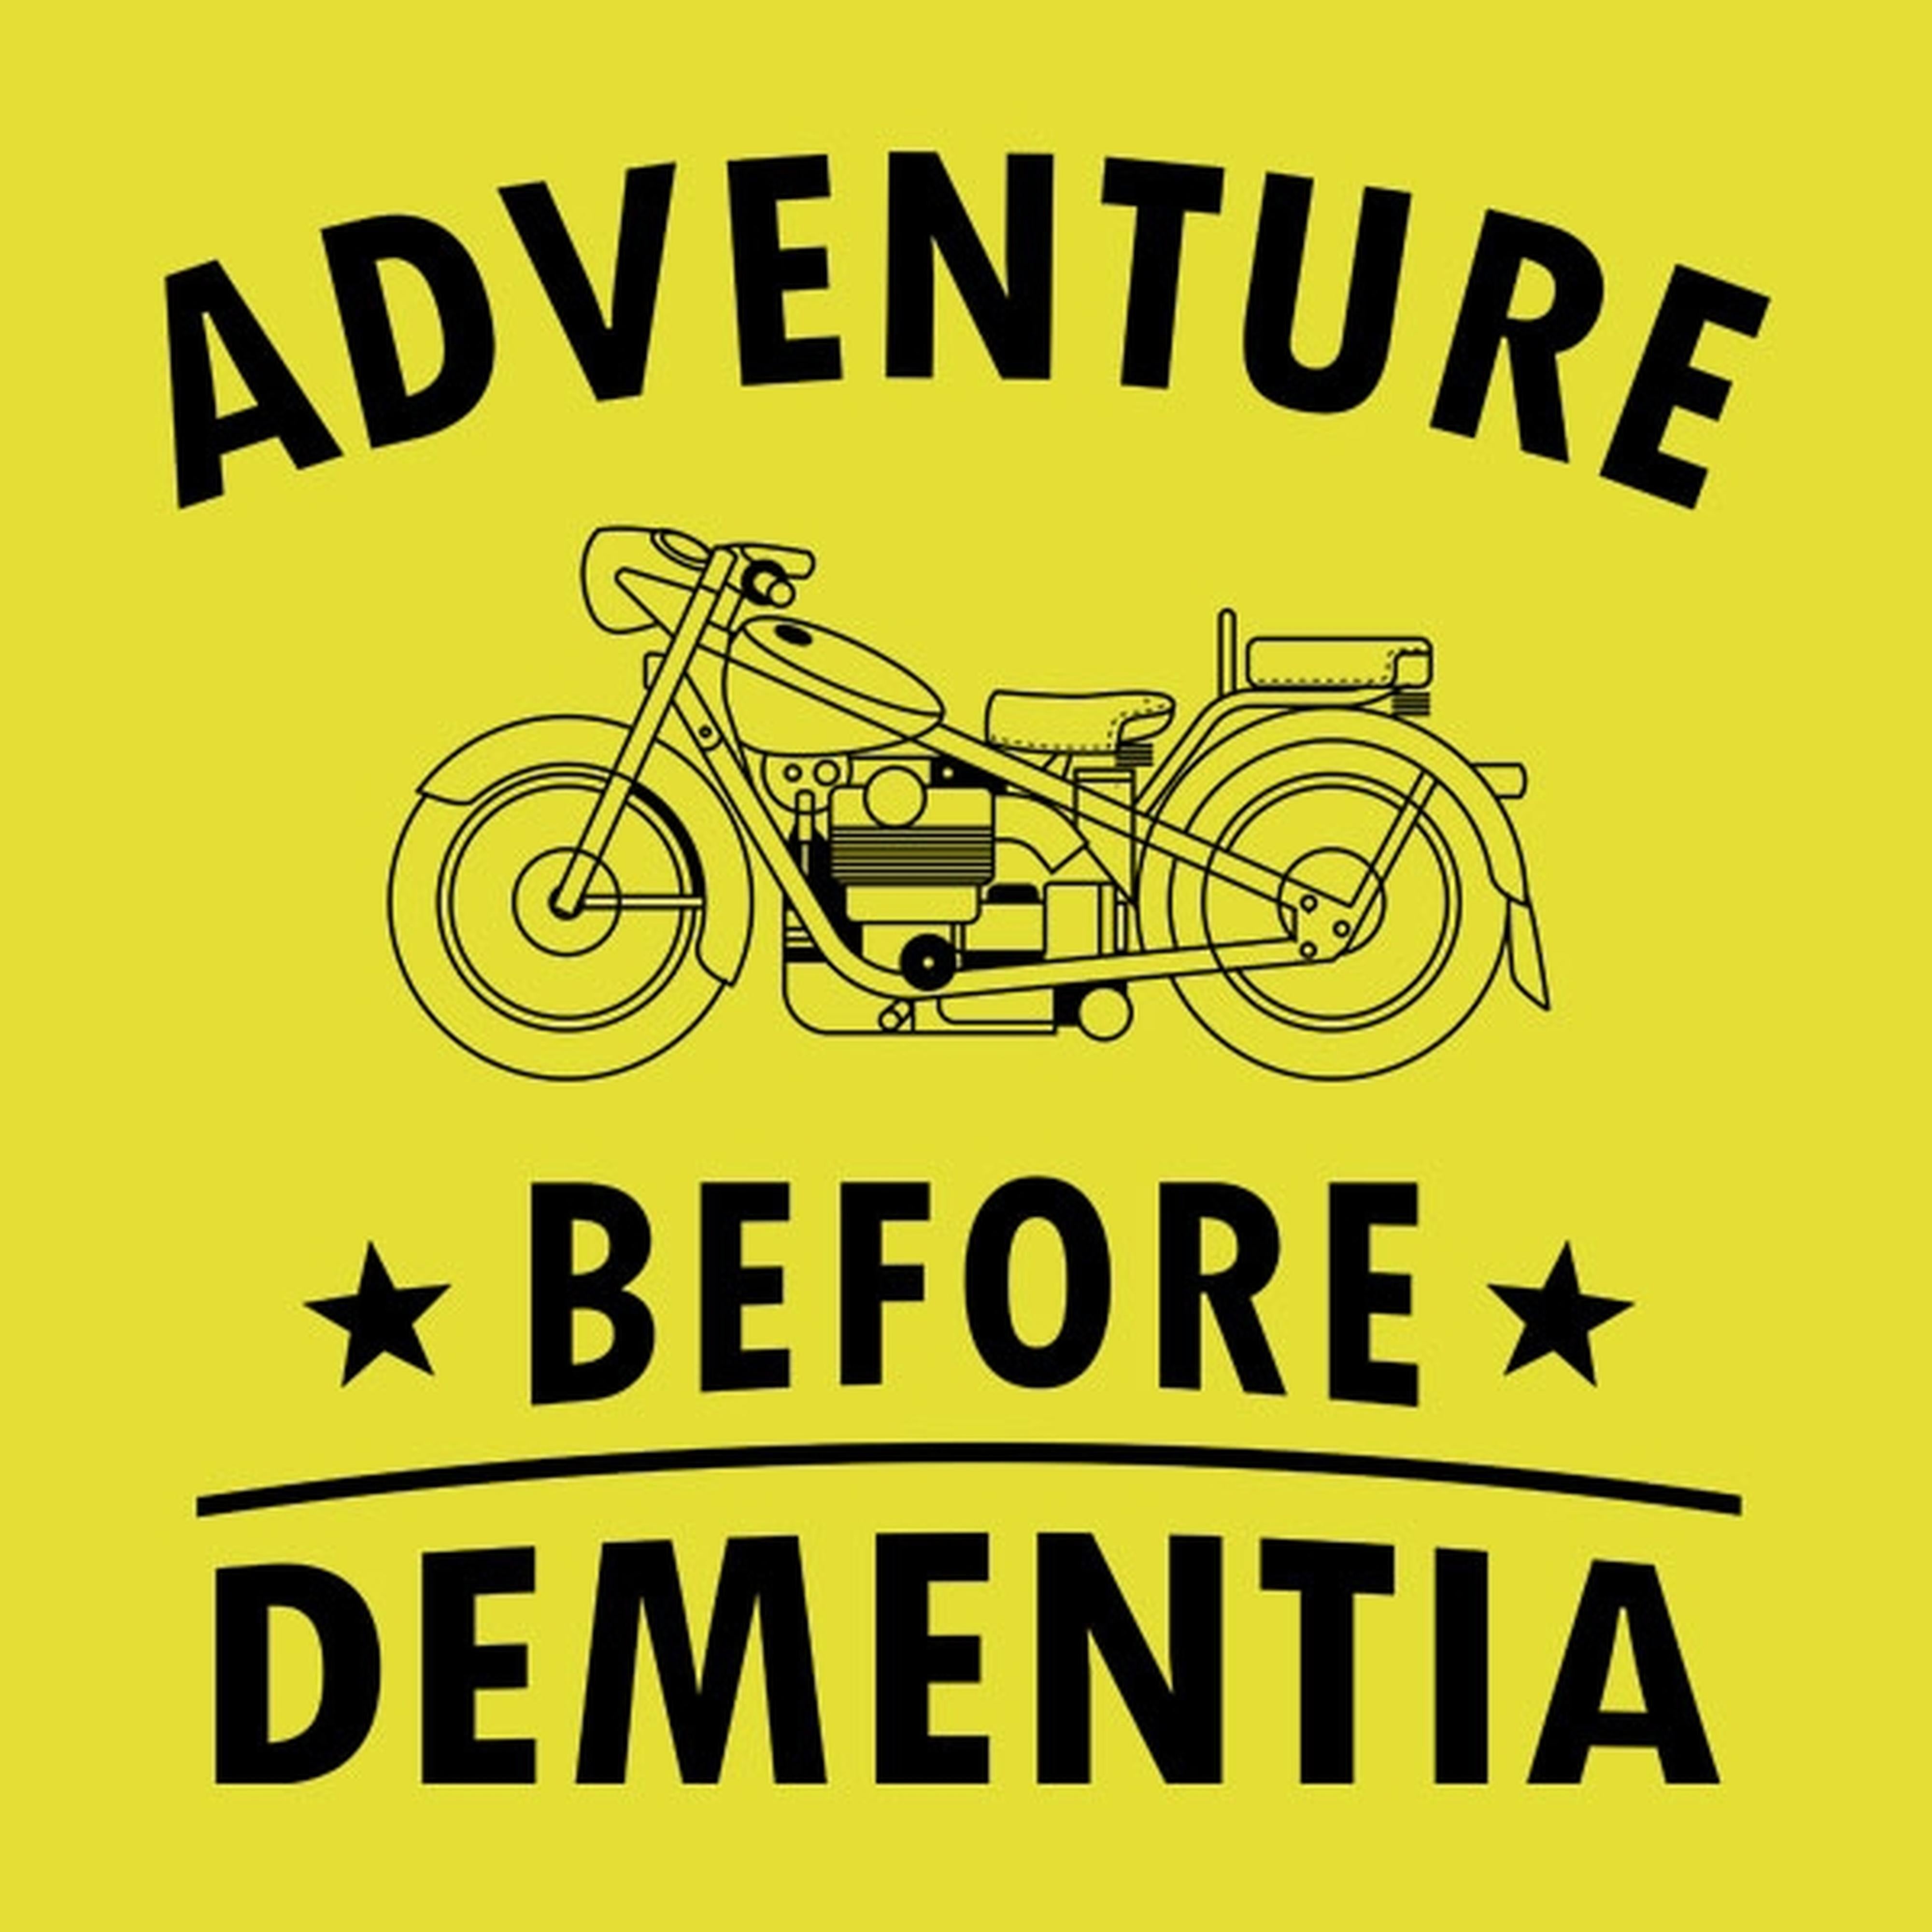 Adventure before dementia (motorbike) - T-shirt